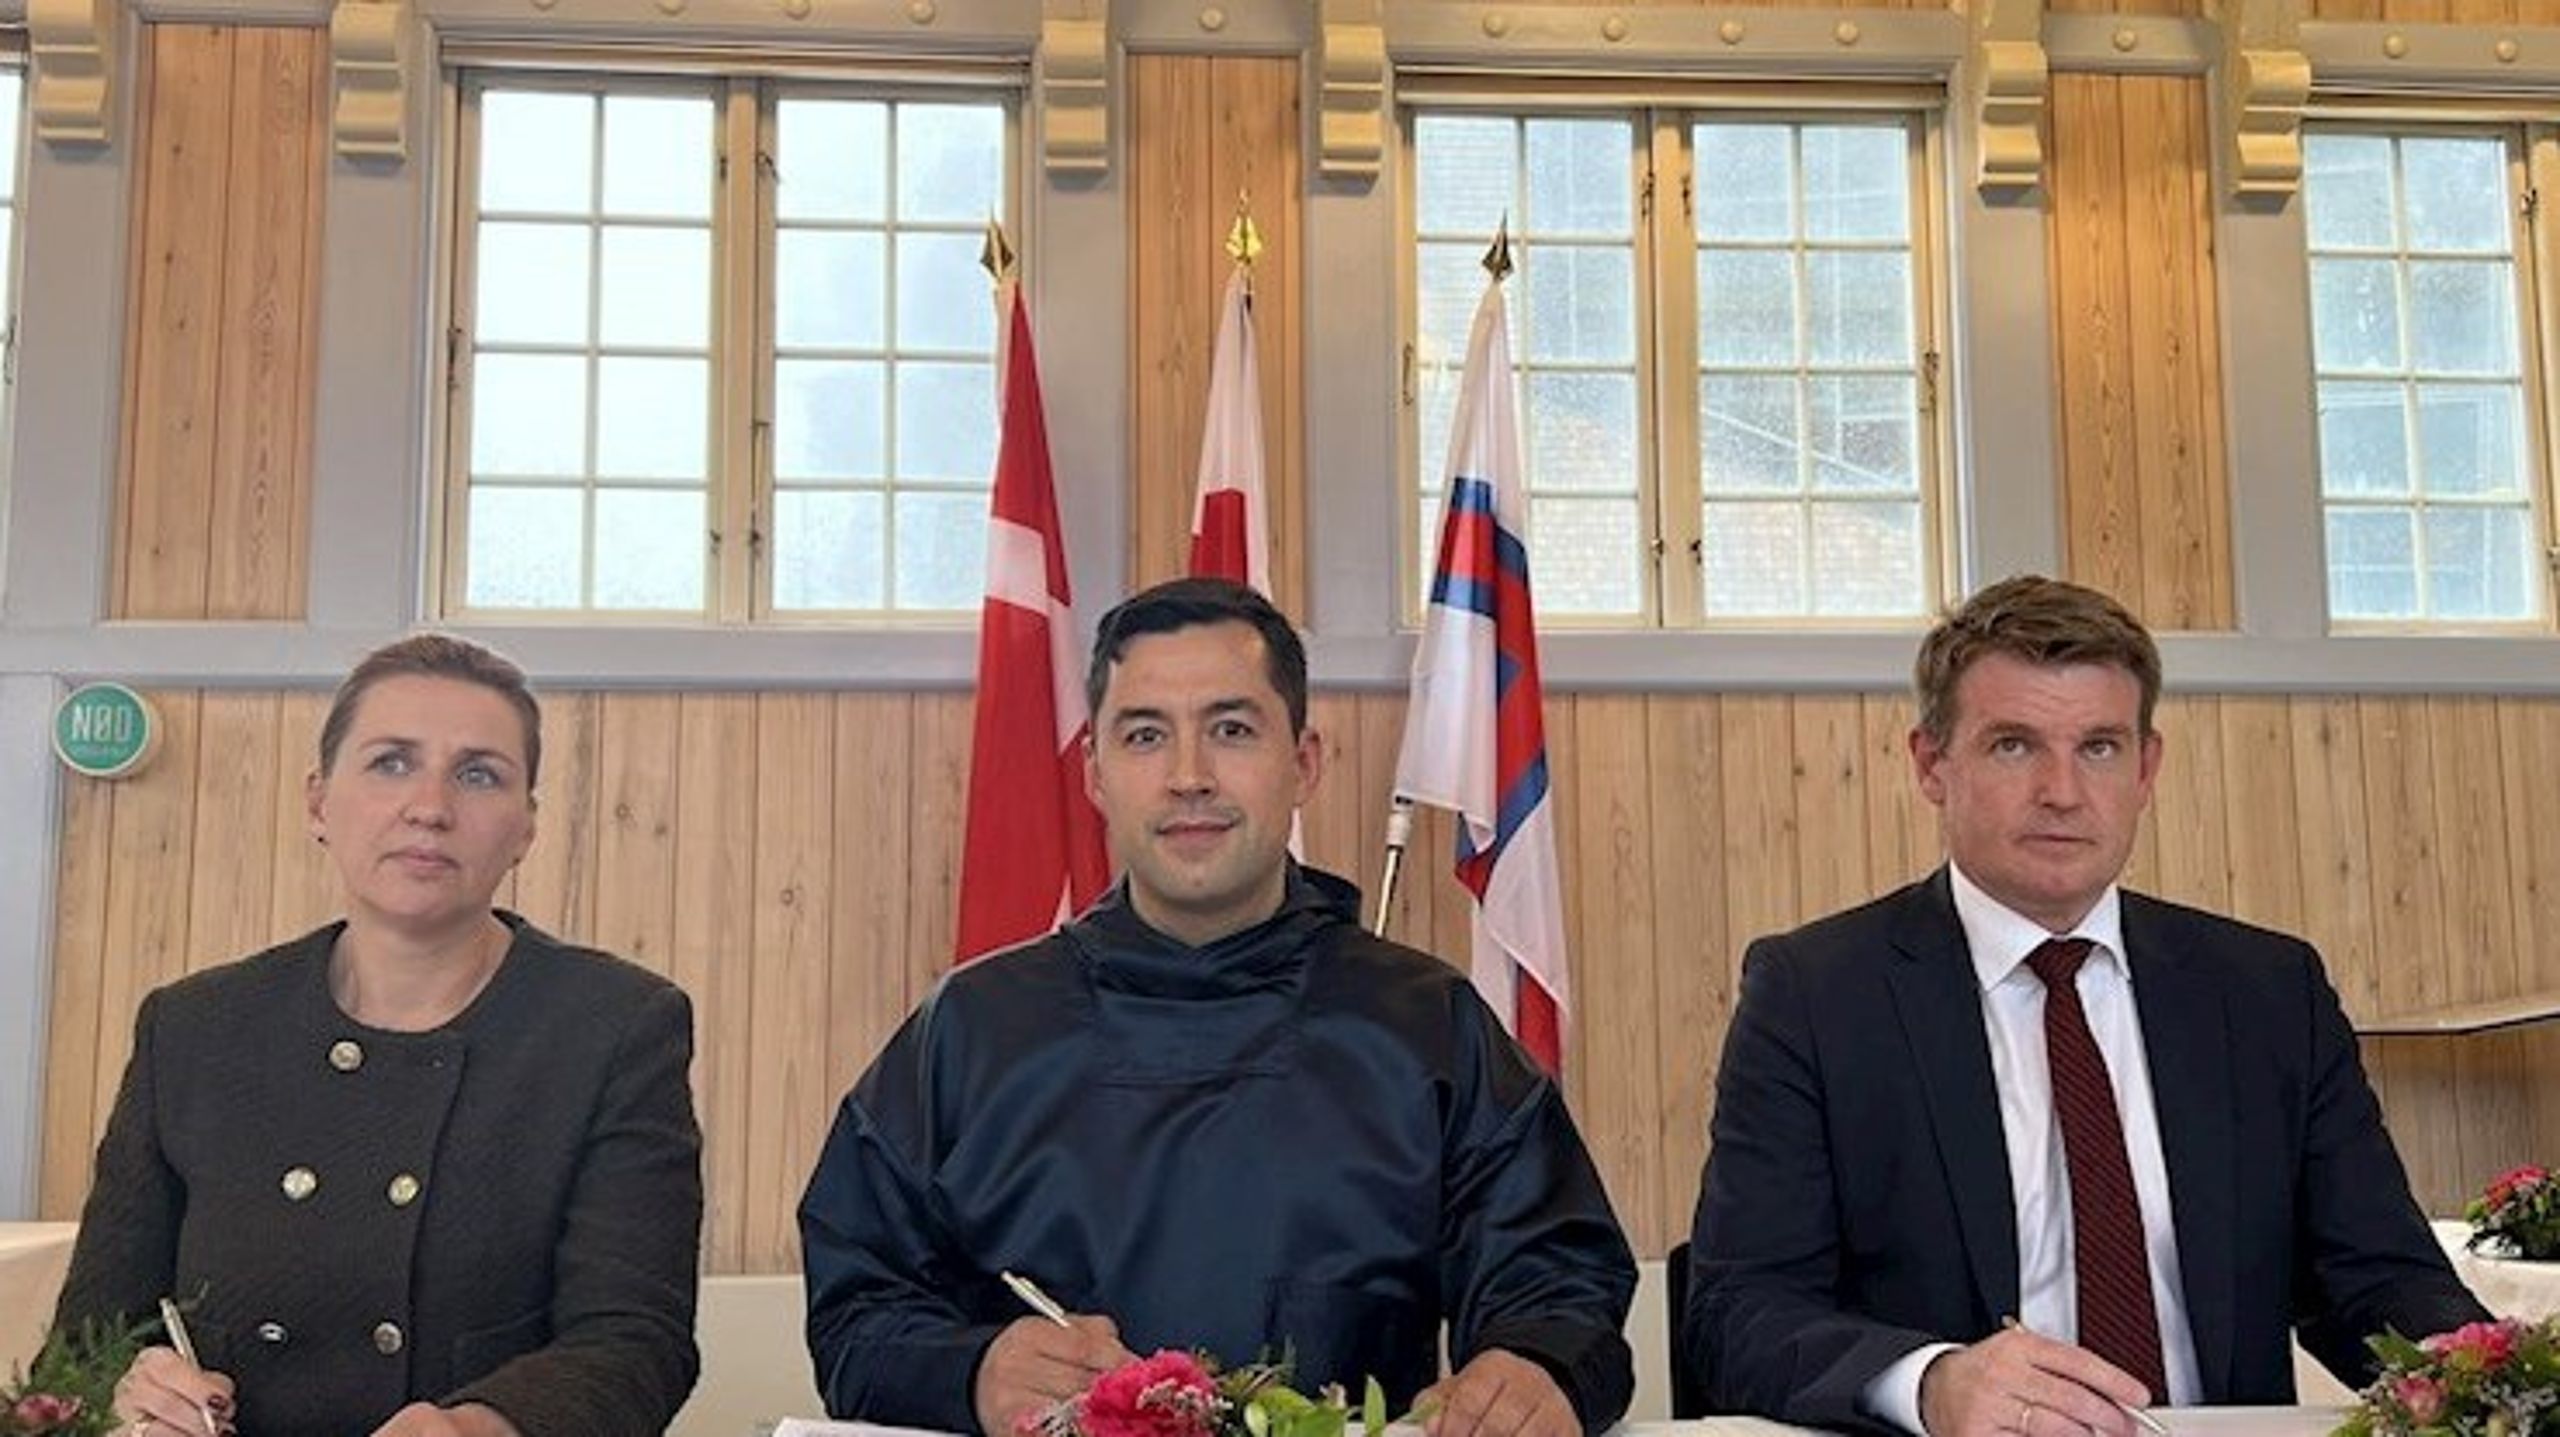 Danmarks statsminister Mette Frederiksen (t.v.), Grønlands landsstyreformand Múte B. Egede (i midten) og Færøernes lagmand Aksel V. Johannesen (t.h.) ved underskrivelsen af sluterklæringen på kontaktudvalgsmødet i Nuuk den 6. juni i år.&nbsp;